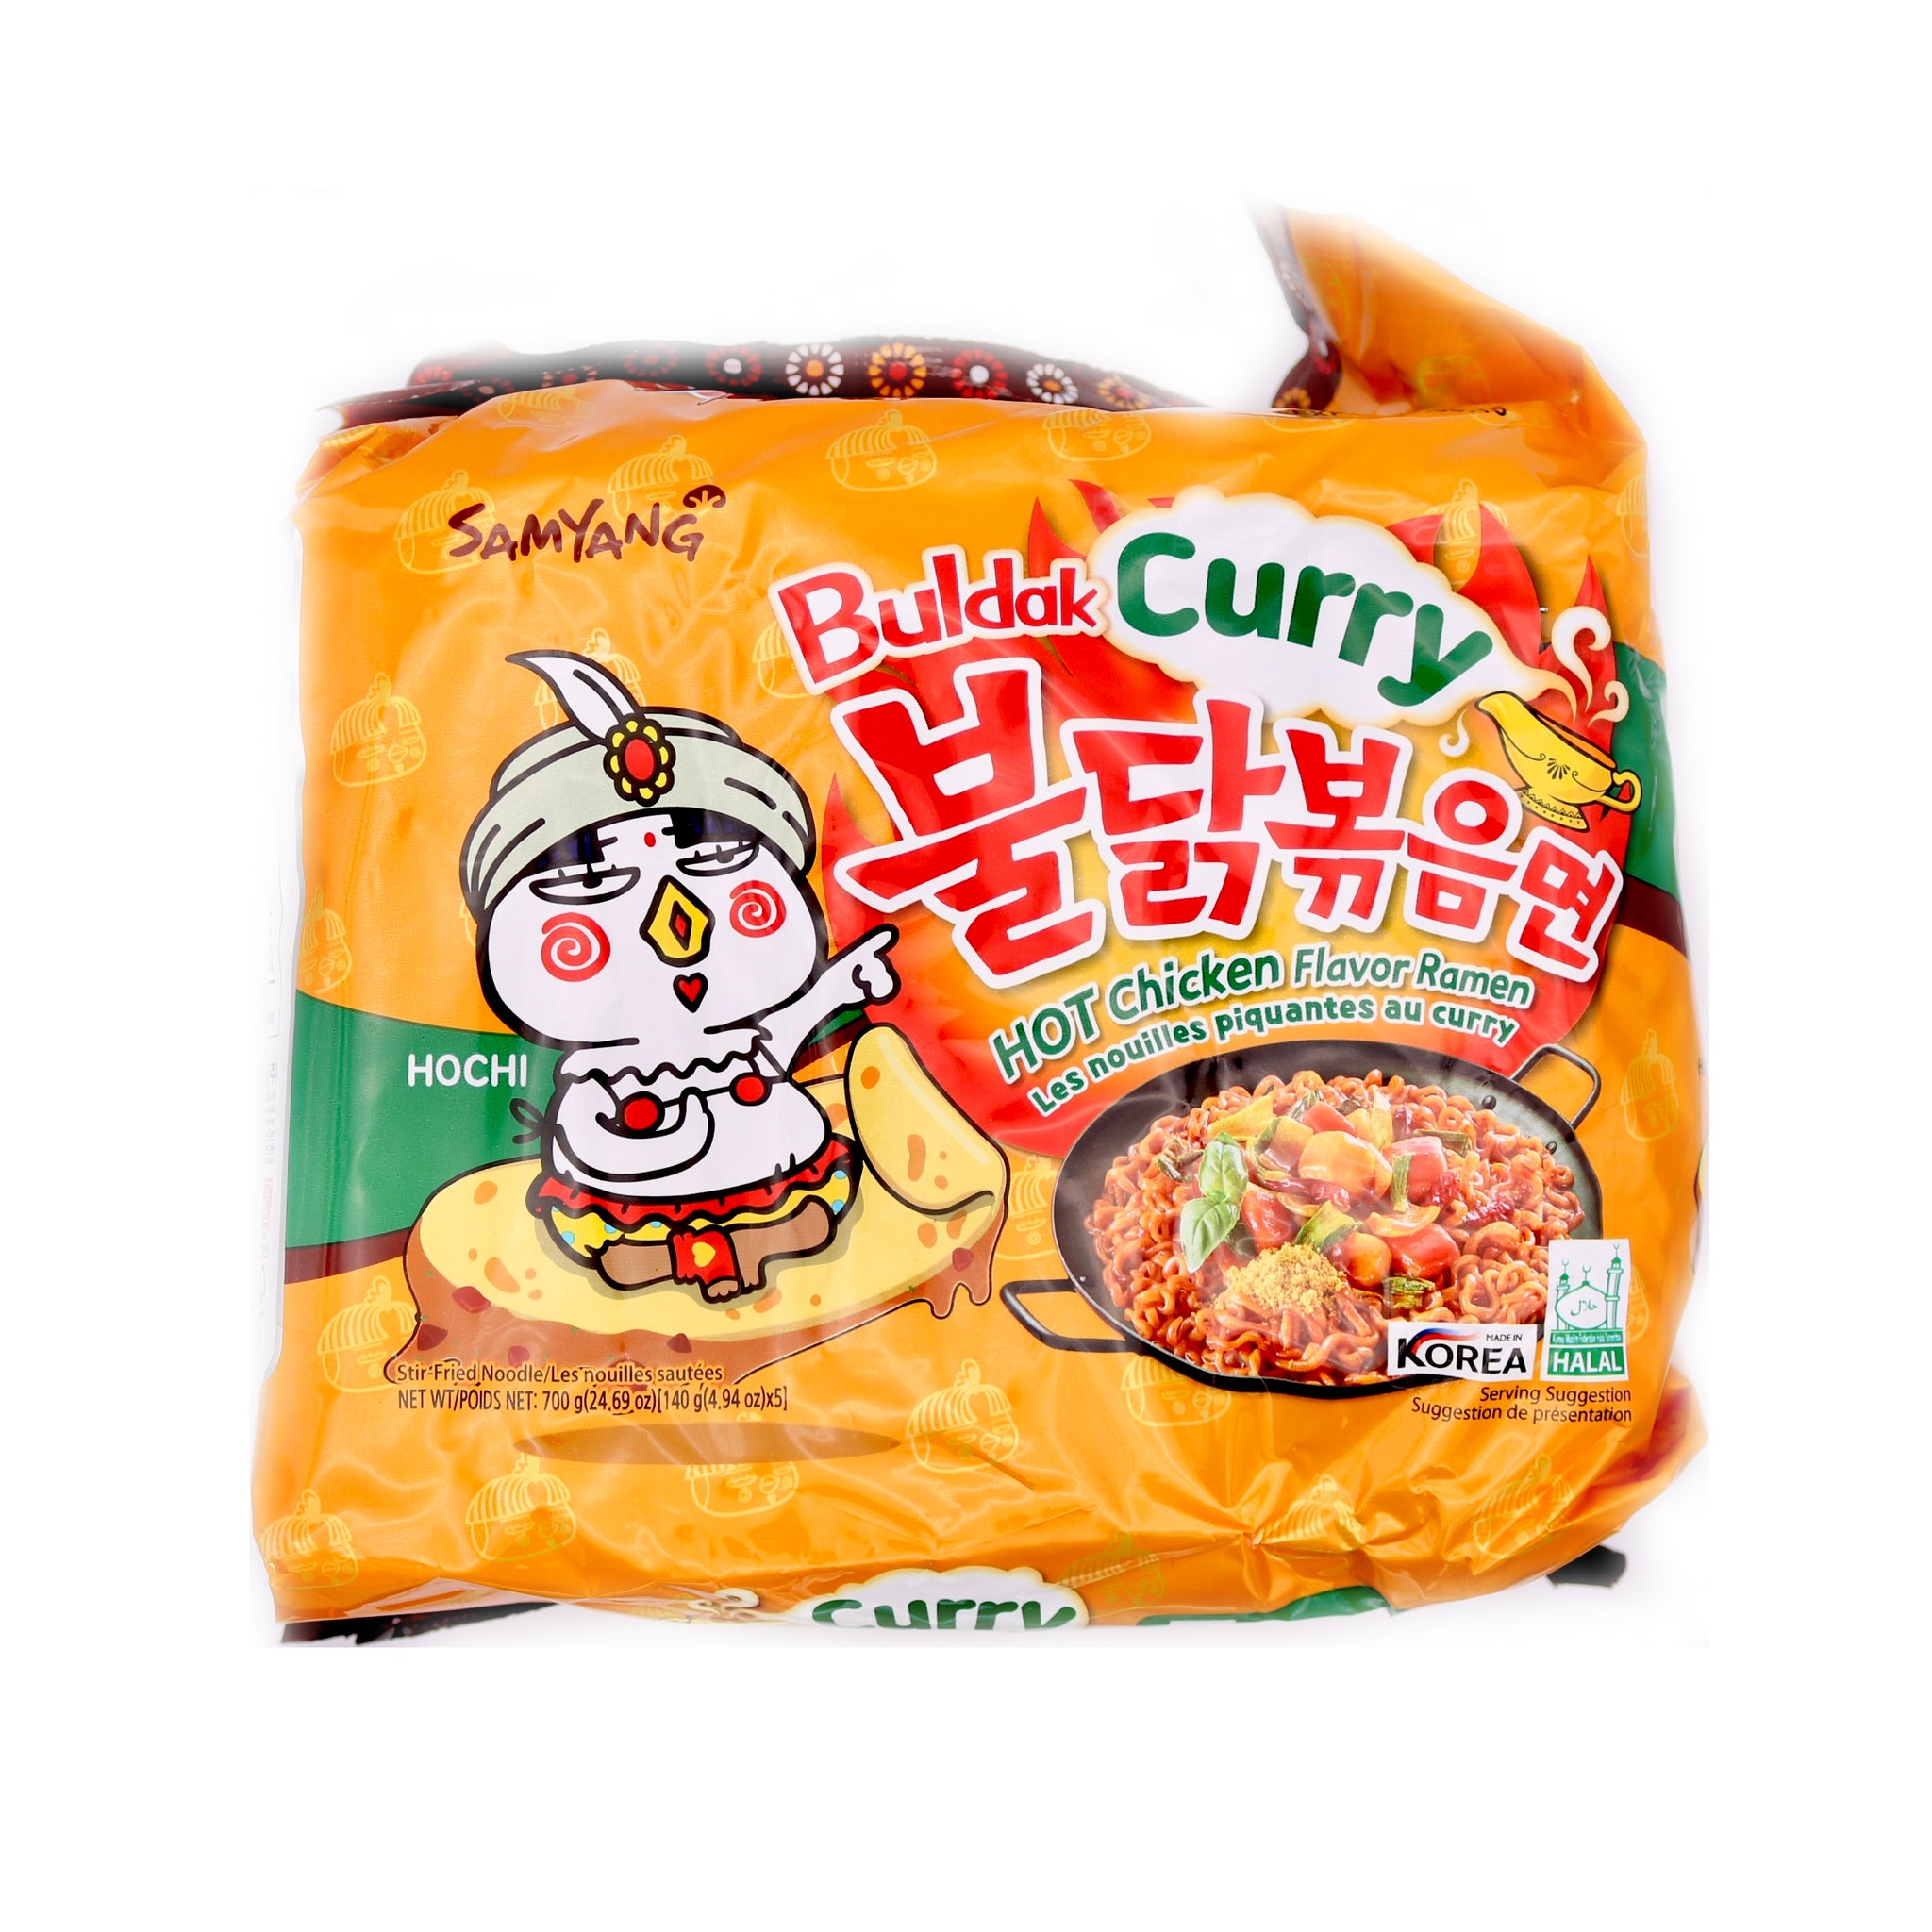 Samyang Jjajang Hot Chicken Flavour Ramen (5 X 140g) 700g - Noodles